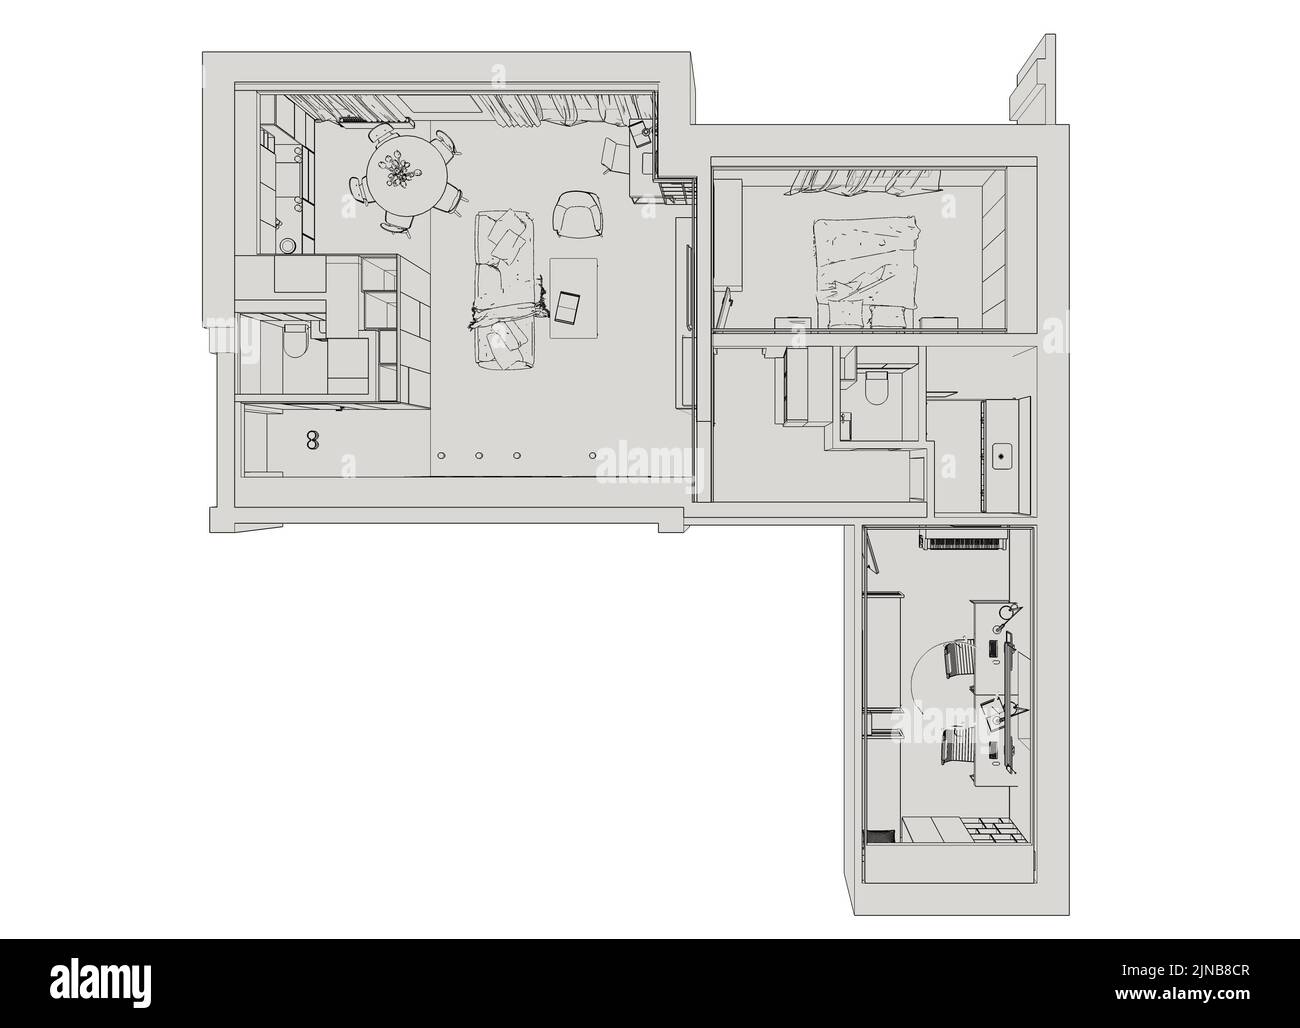 Illustration of interior. Plan. Illustration of apartment in blueprint style. Stock Photo